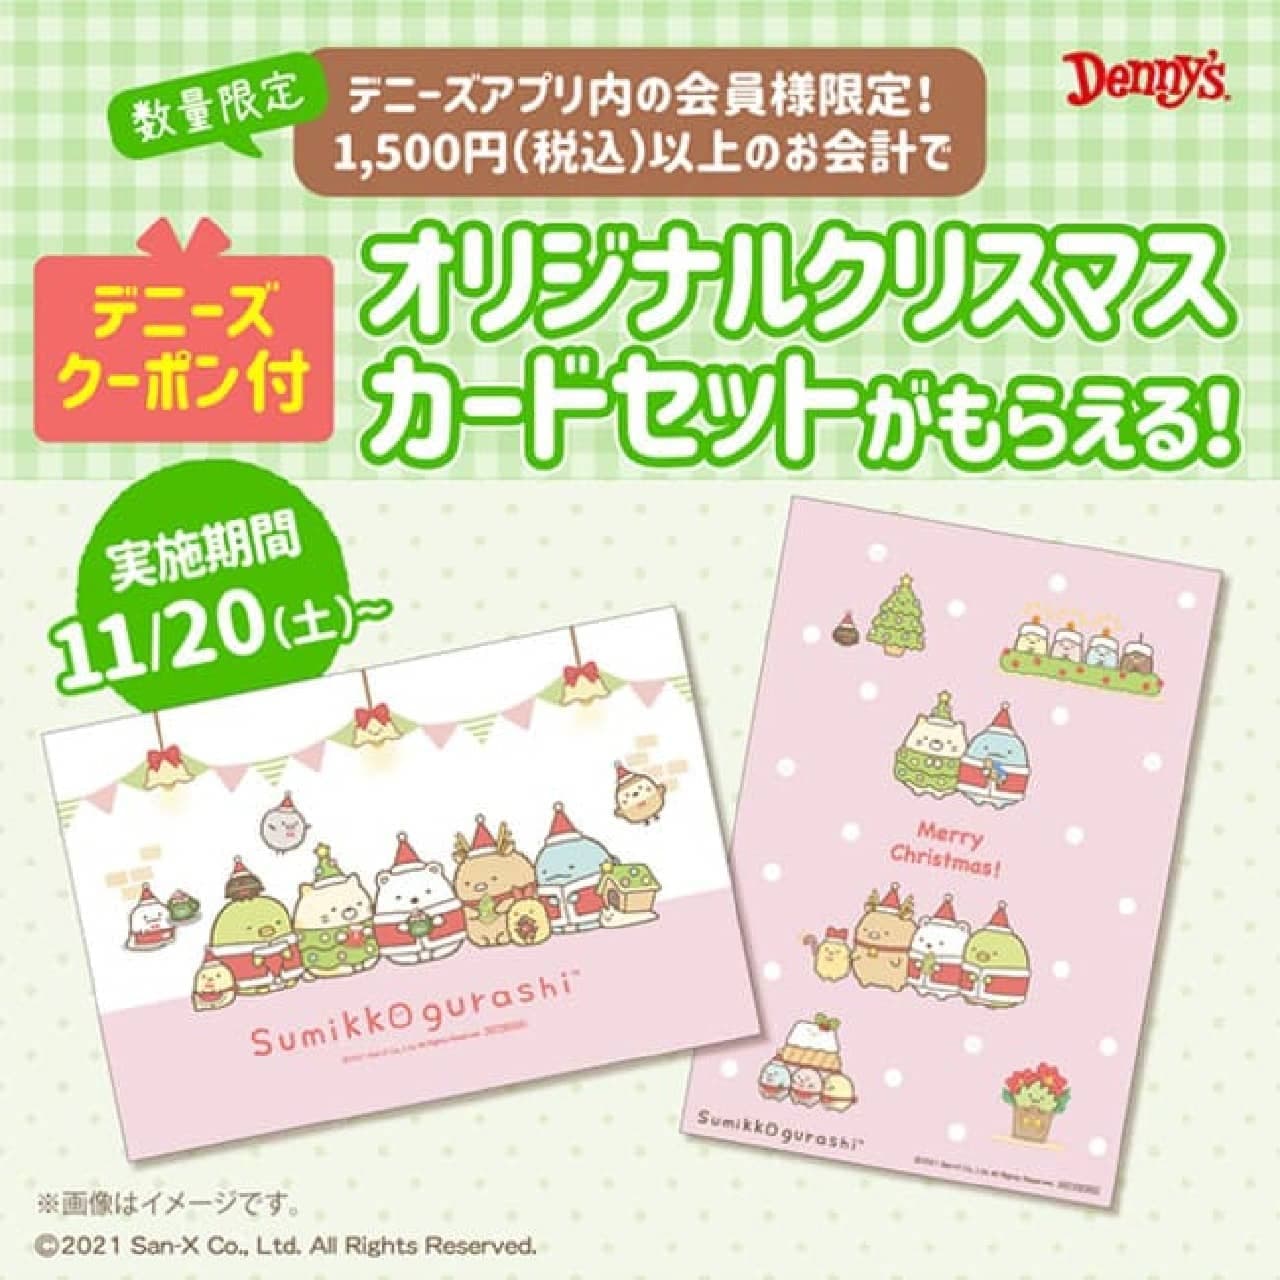 Denny's "Winter Sumikko Gurashi Campaign" Sumikko Gurashi Goods Win! Christmas card set with coupon